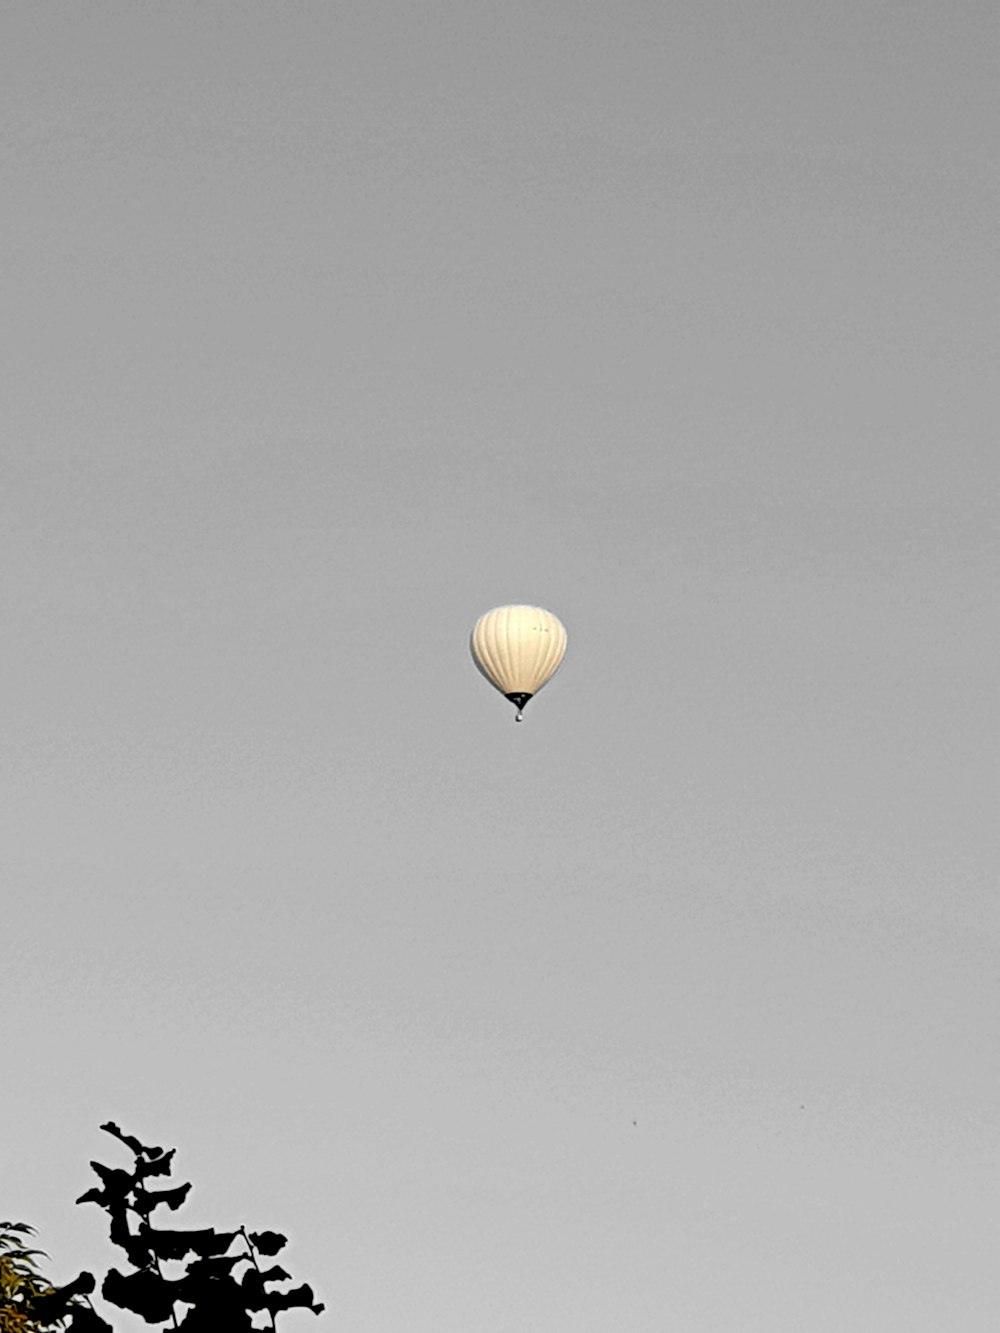 Gelber Heißluftballon schwebt am Himmel